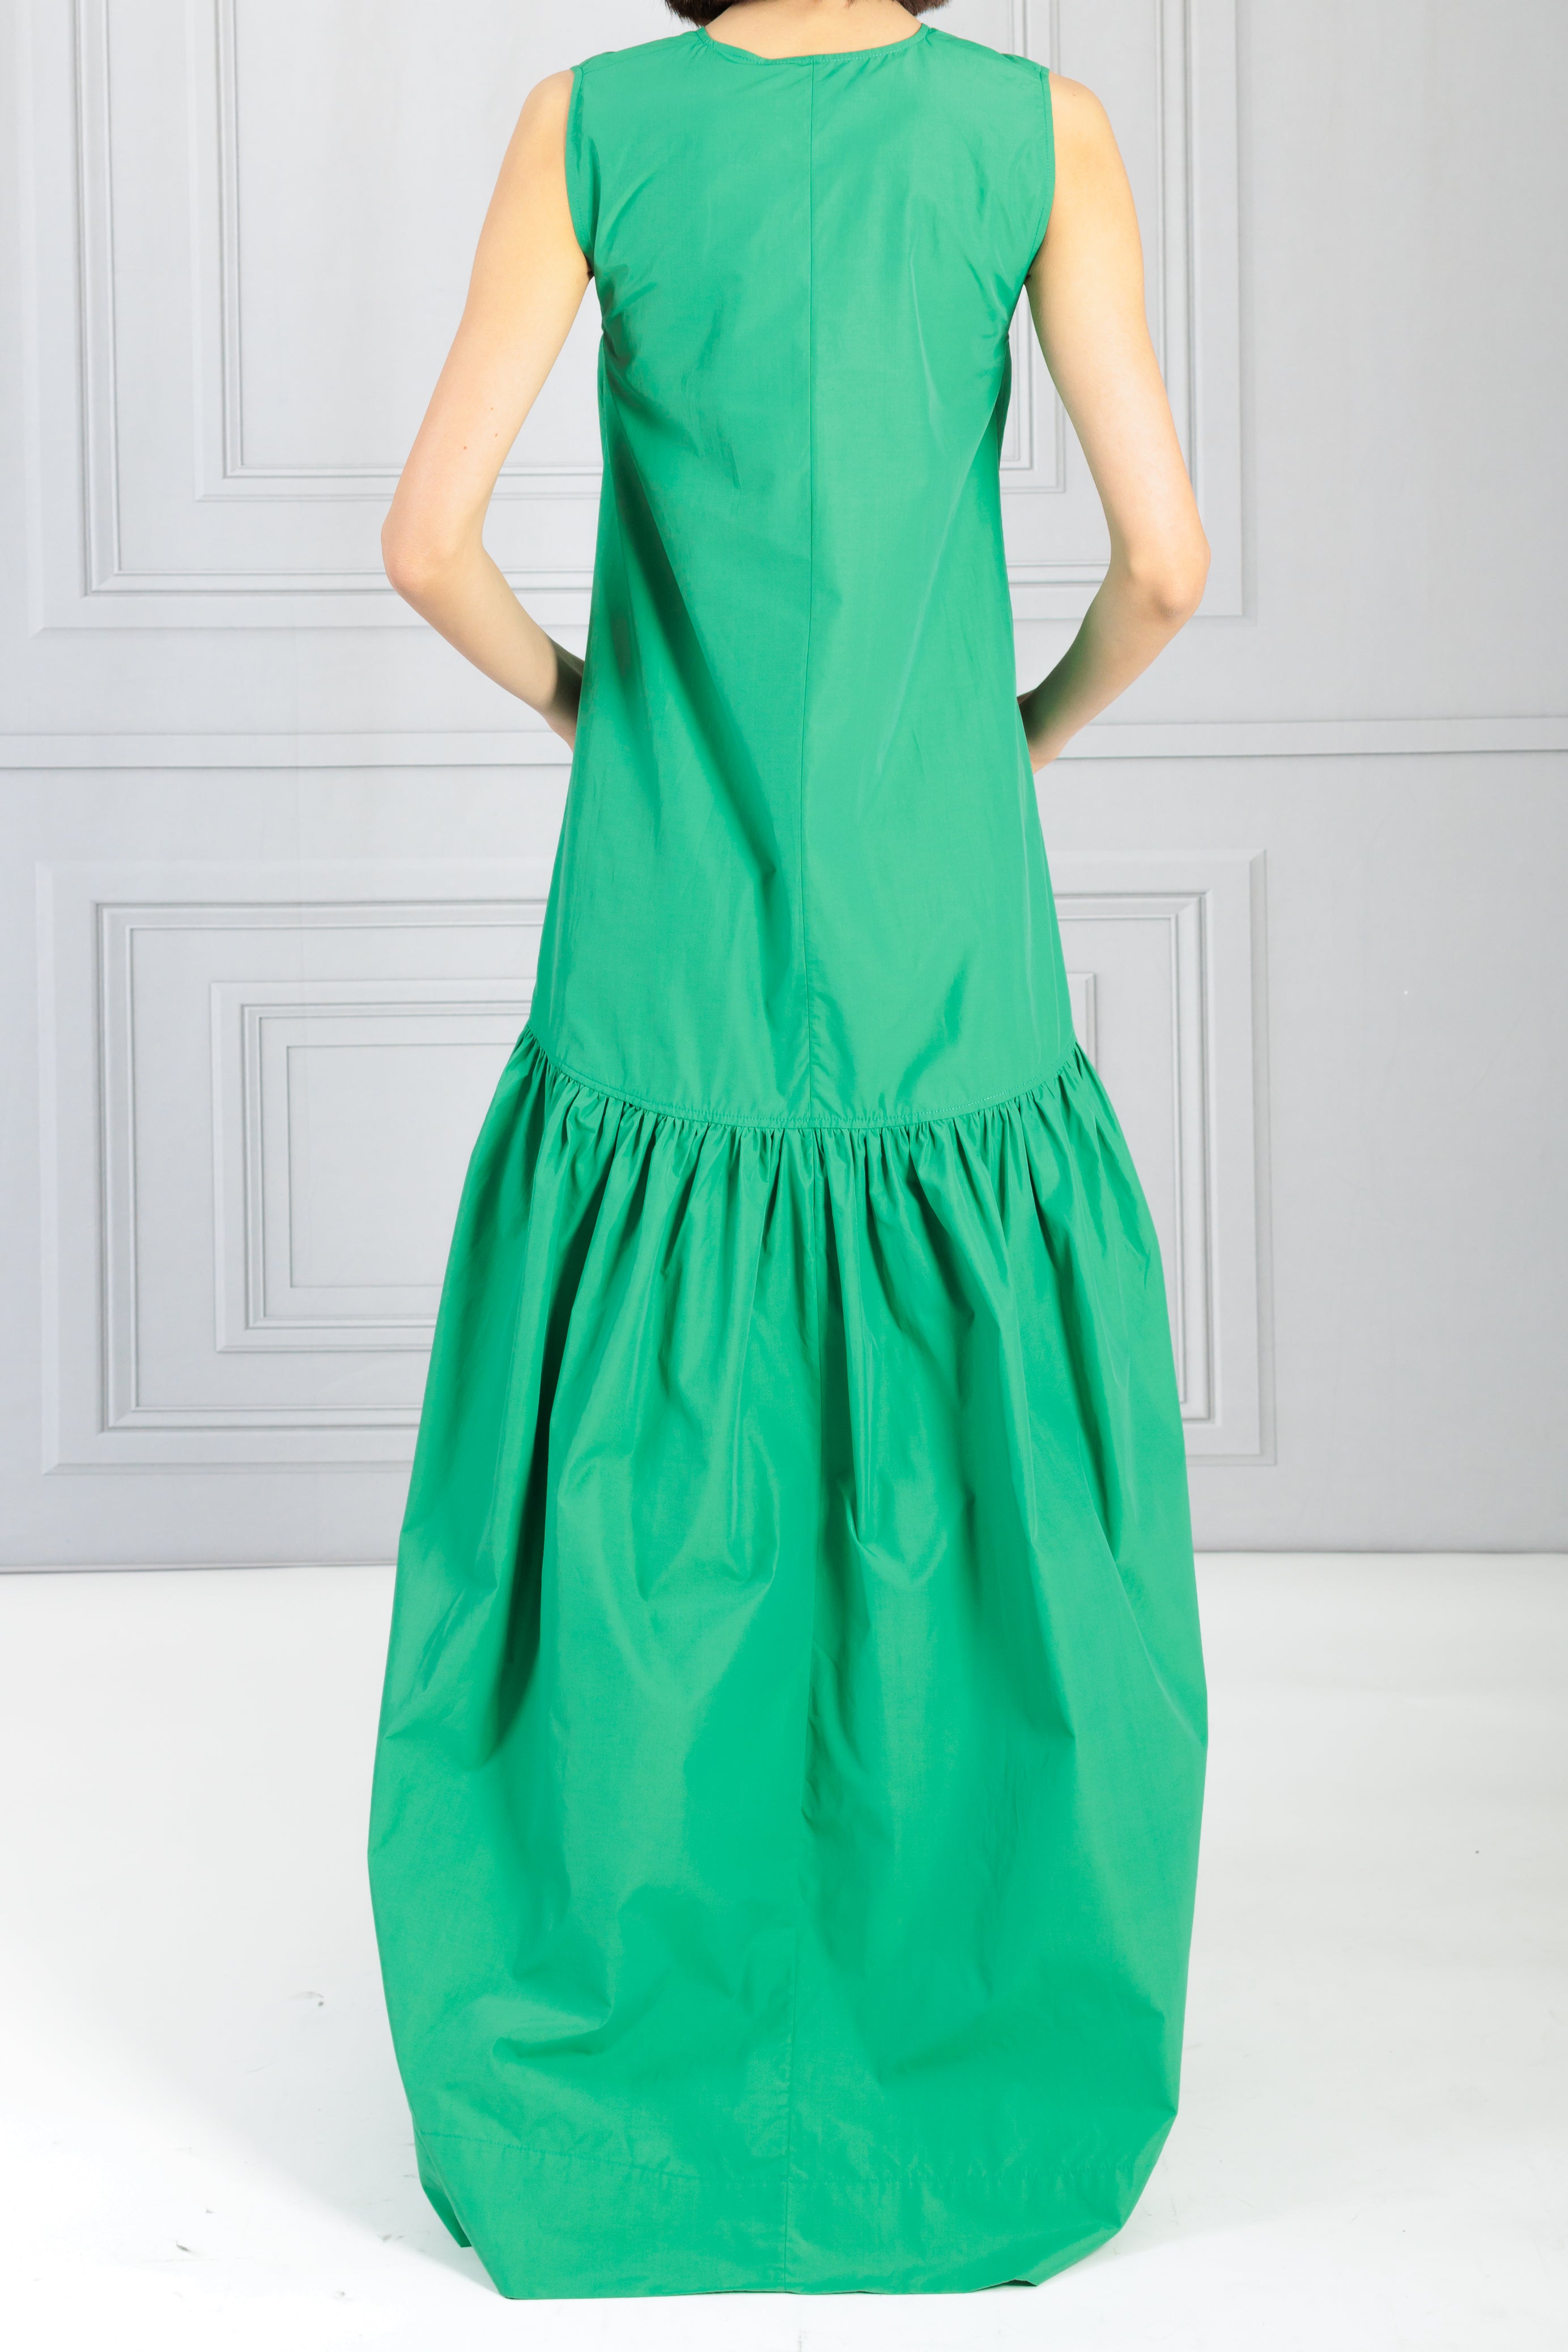 Plan C | Emerald Long Dress